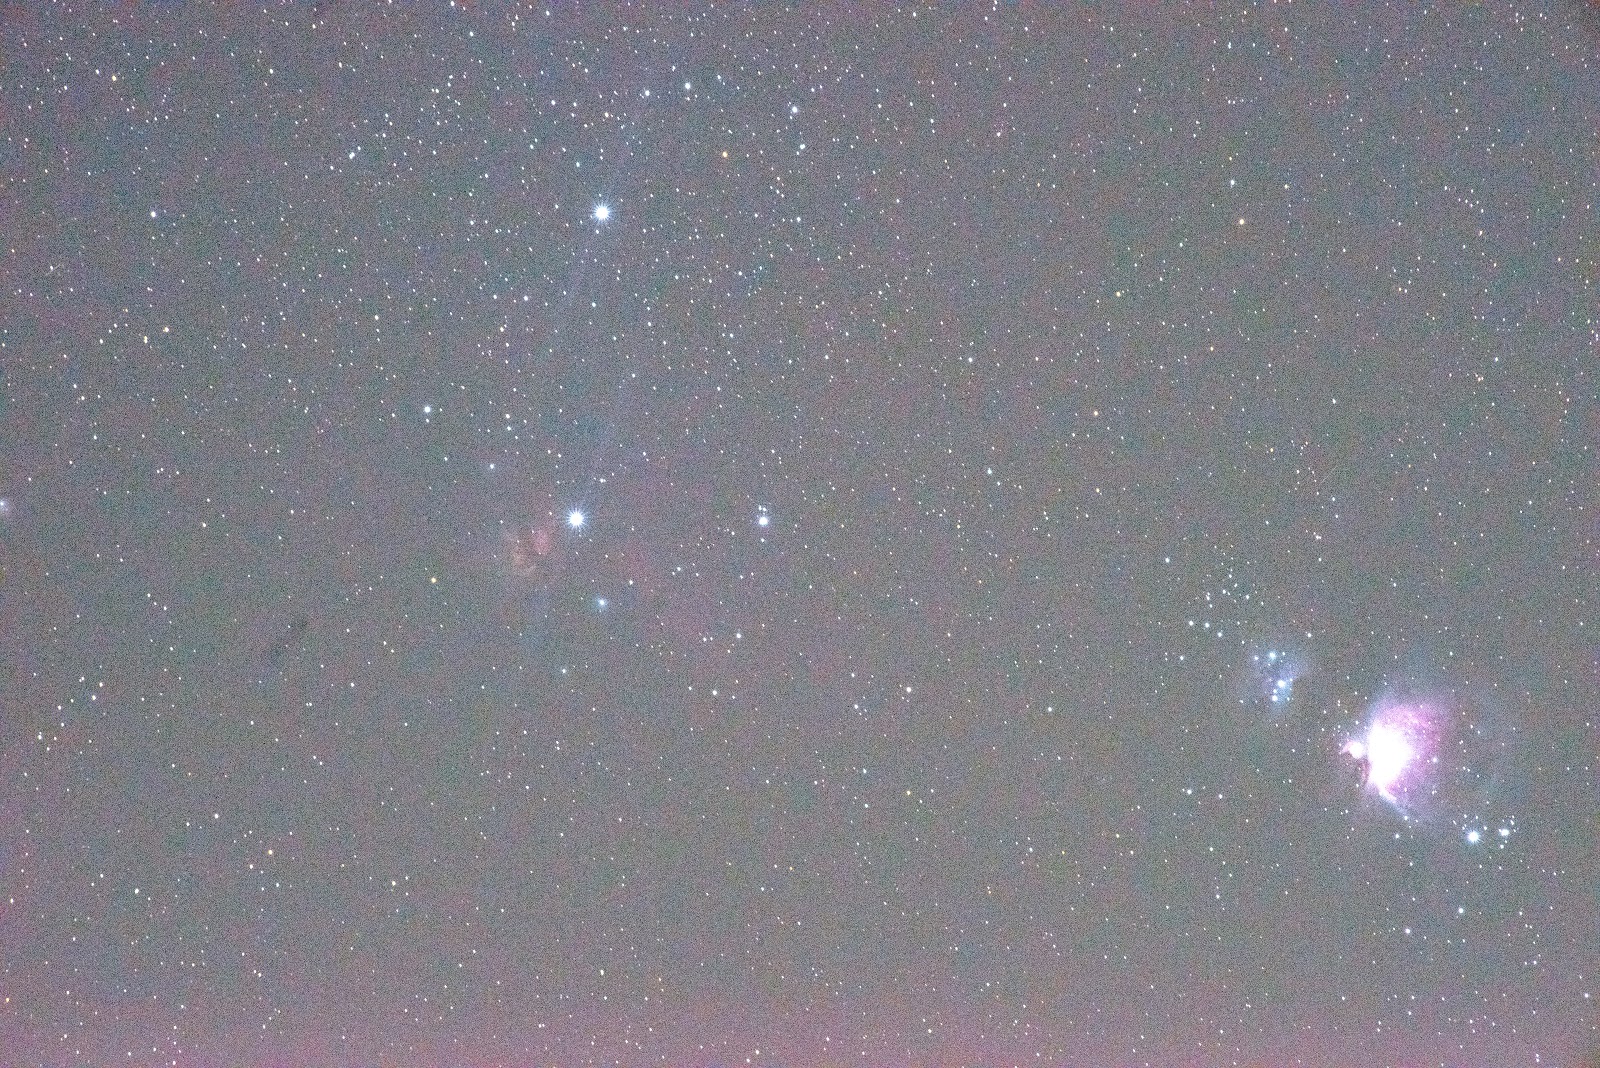 Pz Pentax Astrotracer Ogps Photo Ic434 馬頭星雲 Ngc24 火焰星雲